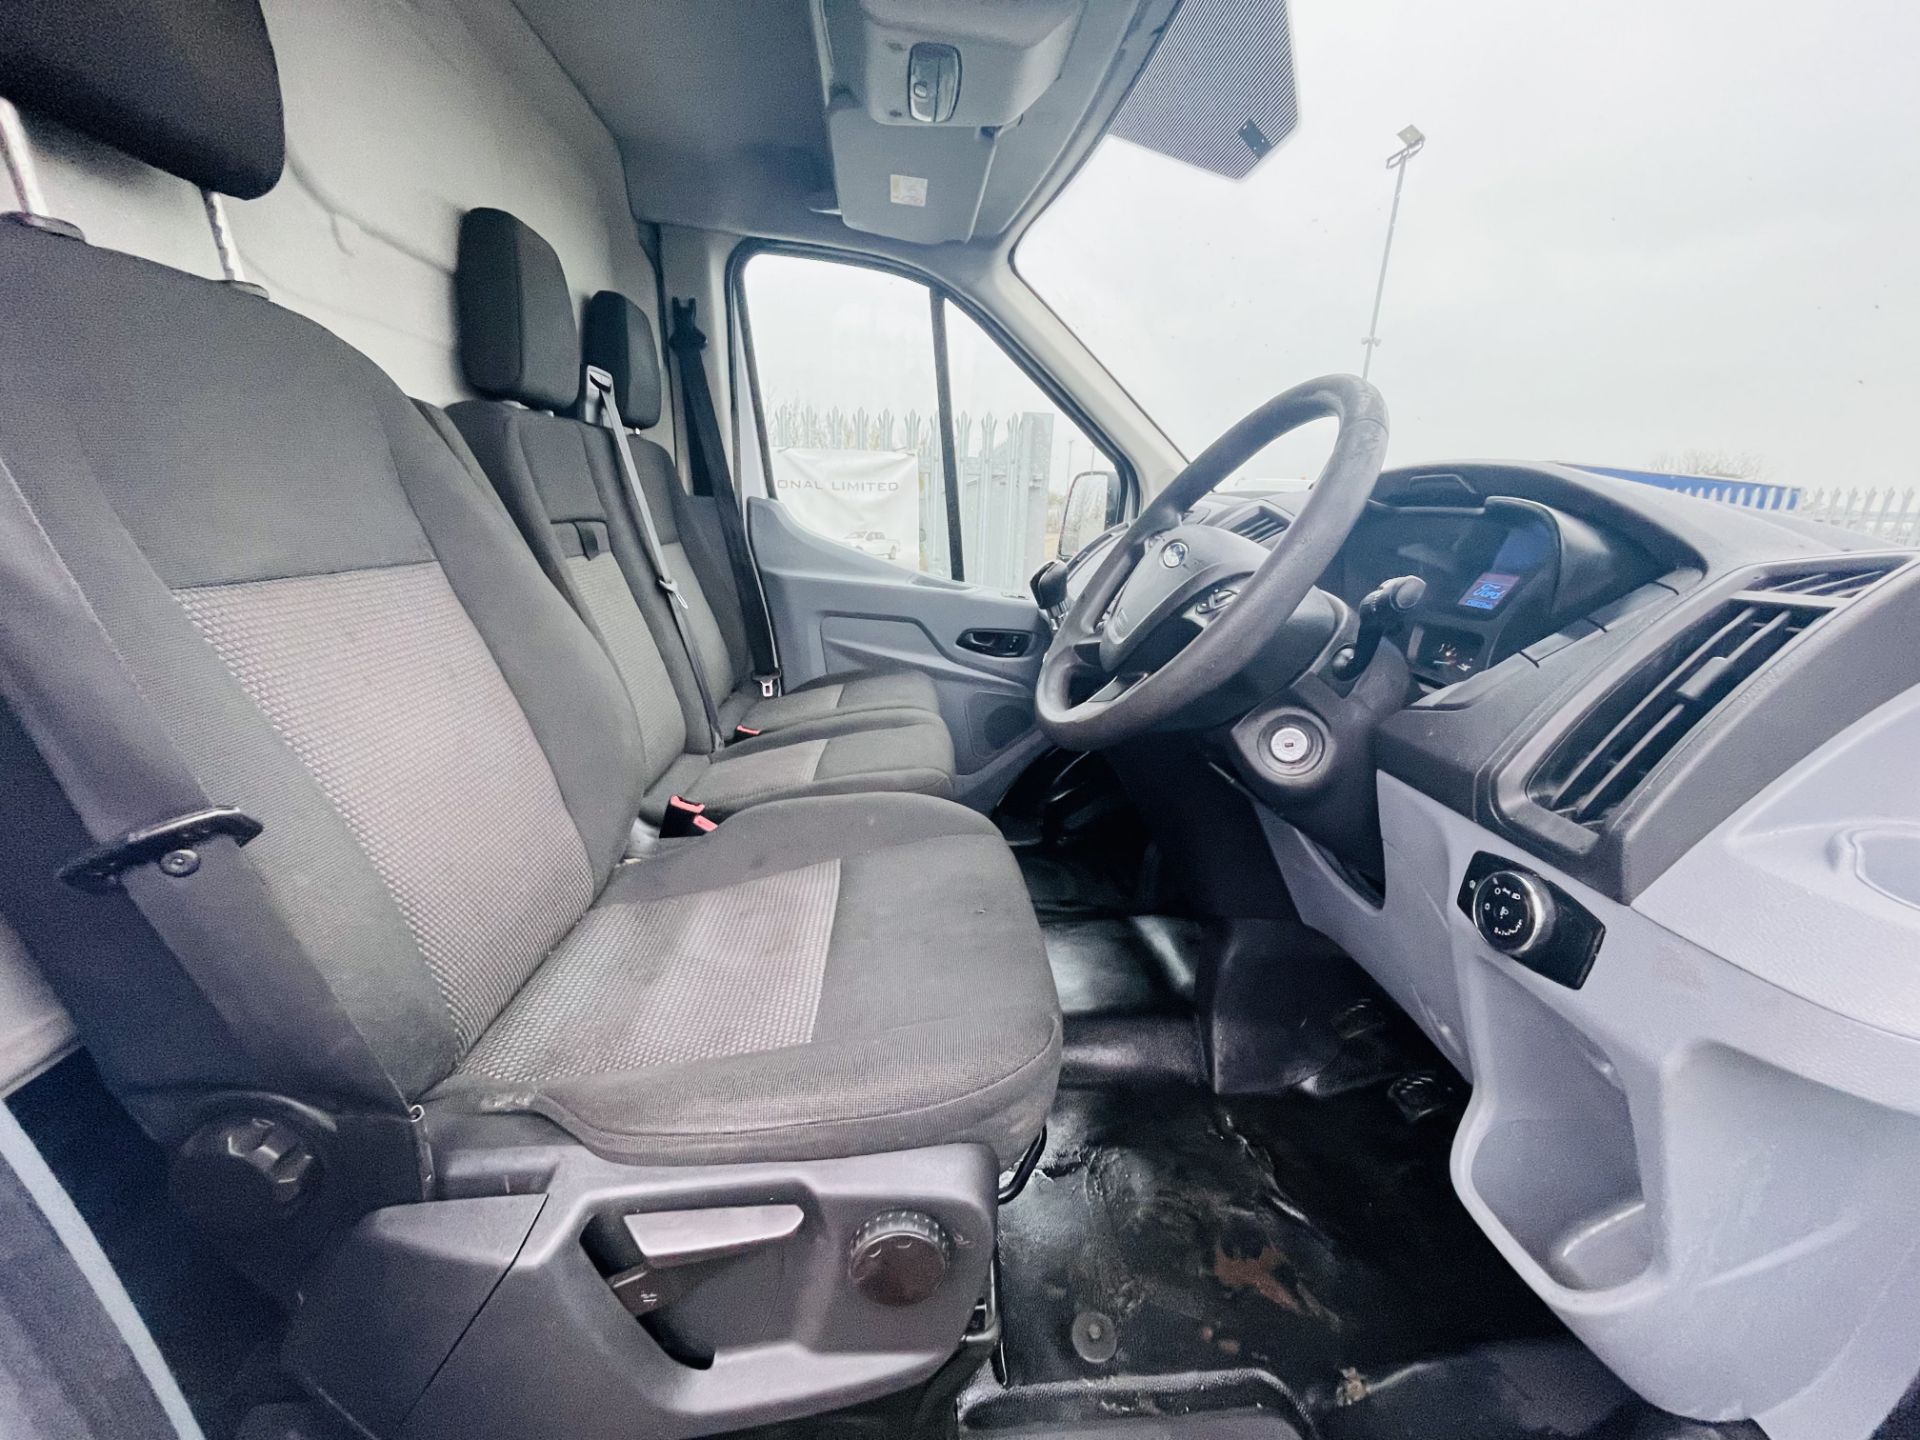 Ford Transit 2.2 TDCI 125 T350 Rwd L2 H3 2016 '16 Reg' - Panel Van - No Vat Save 20% - Image 18 of 21